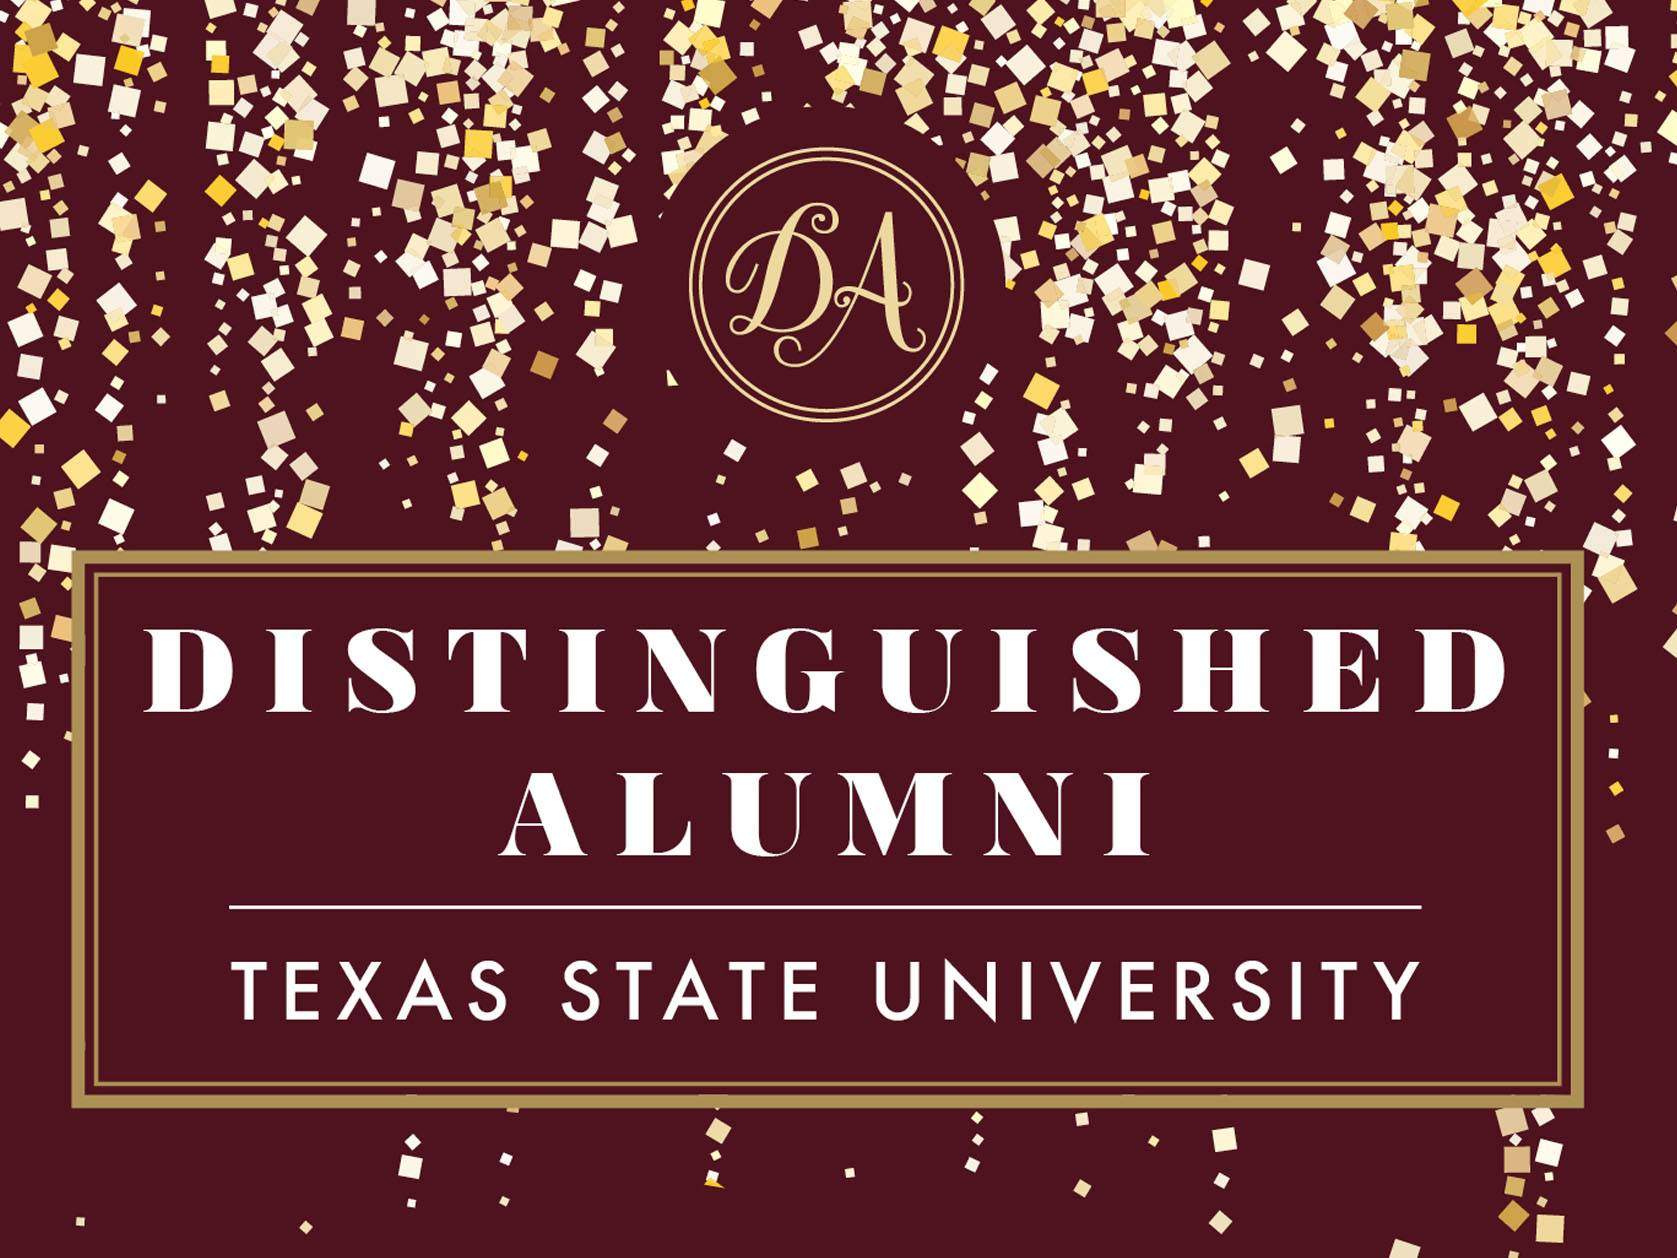 graphic reading "distinguished alumni"